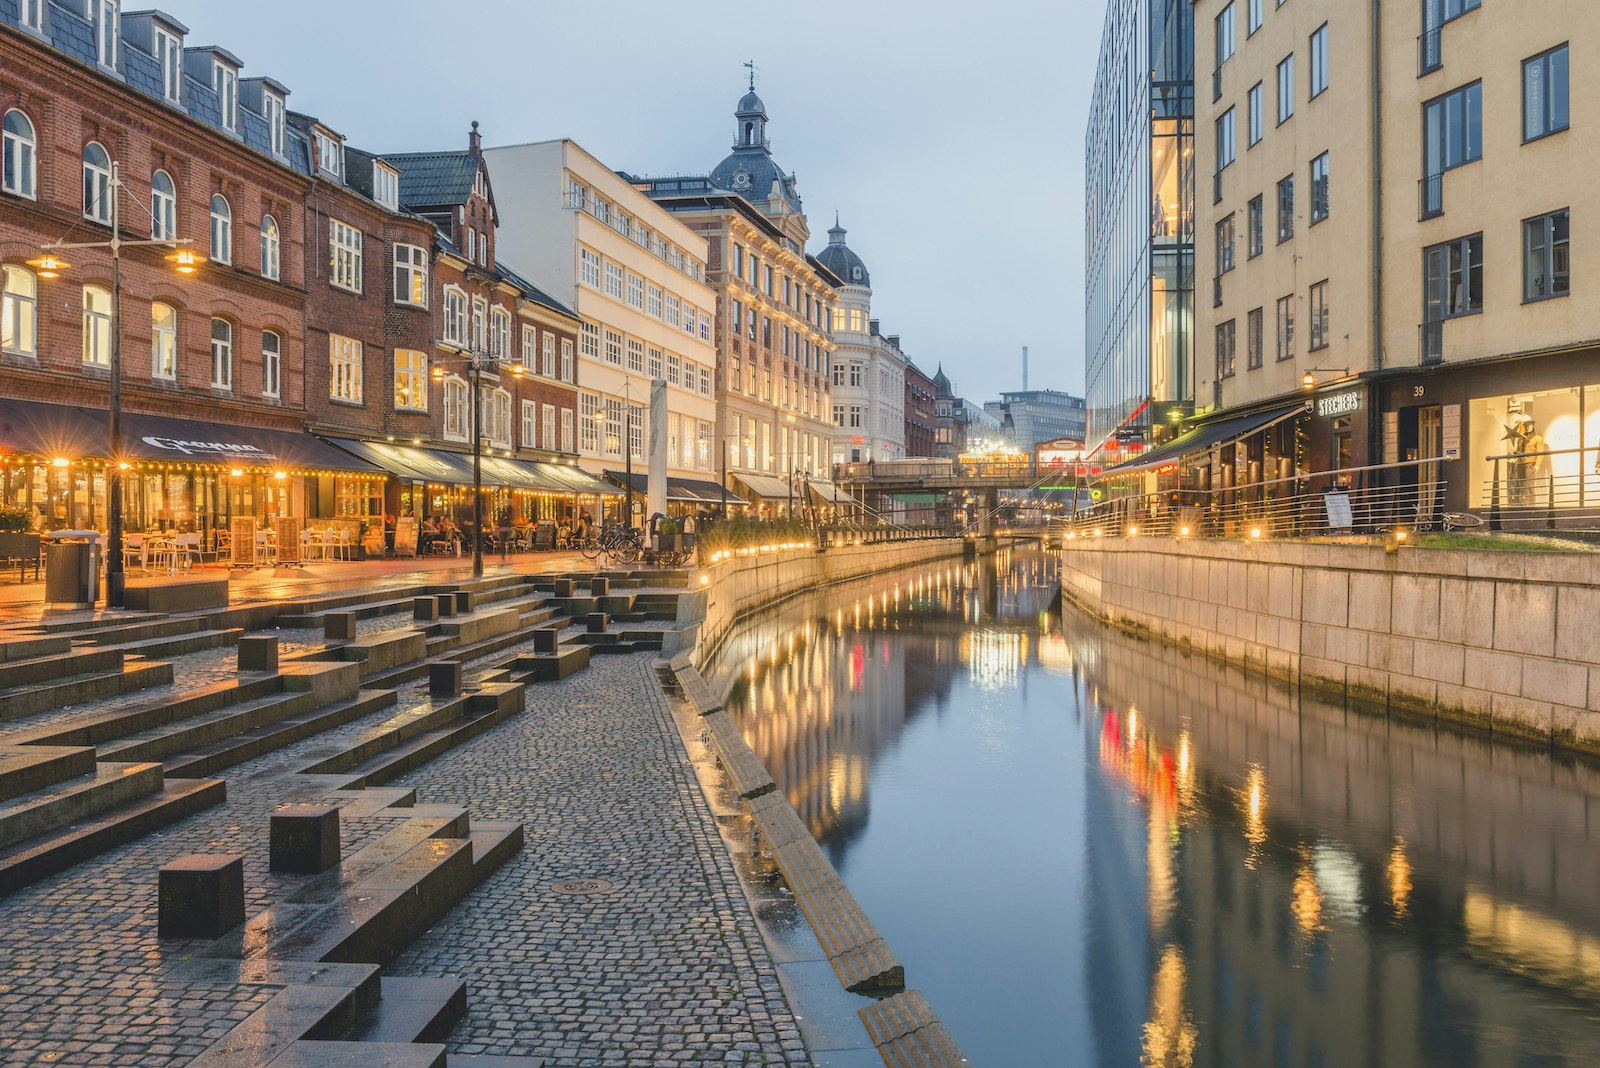 The city of Aarhus is lit up on each side of the canal as dusk falls; Copenhagen alternatives